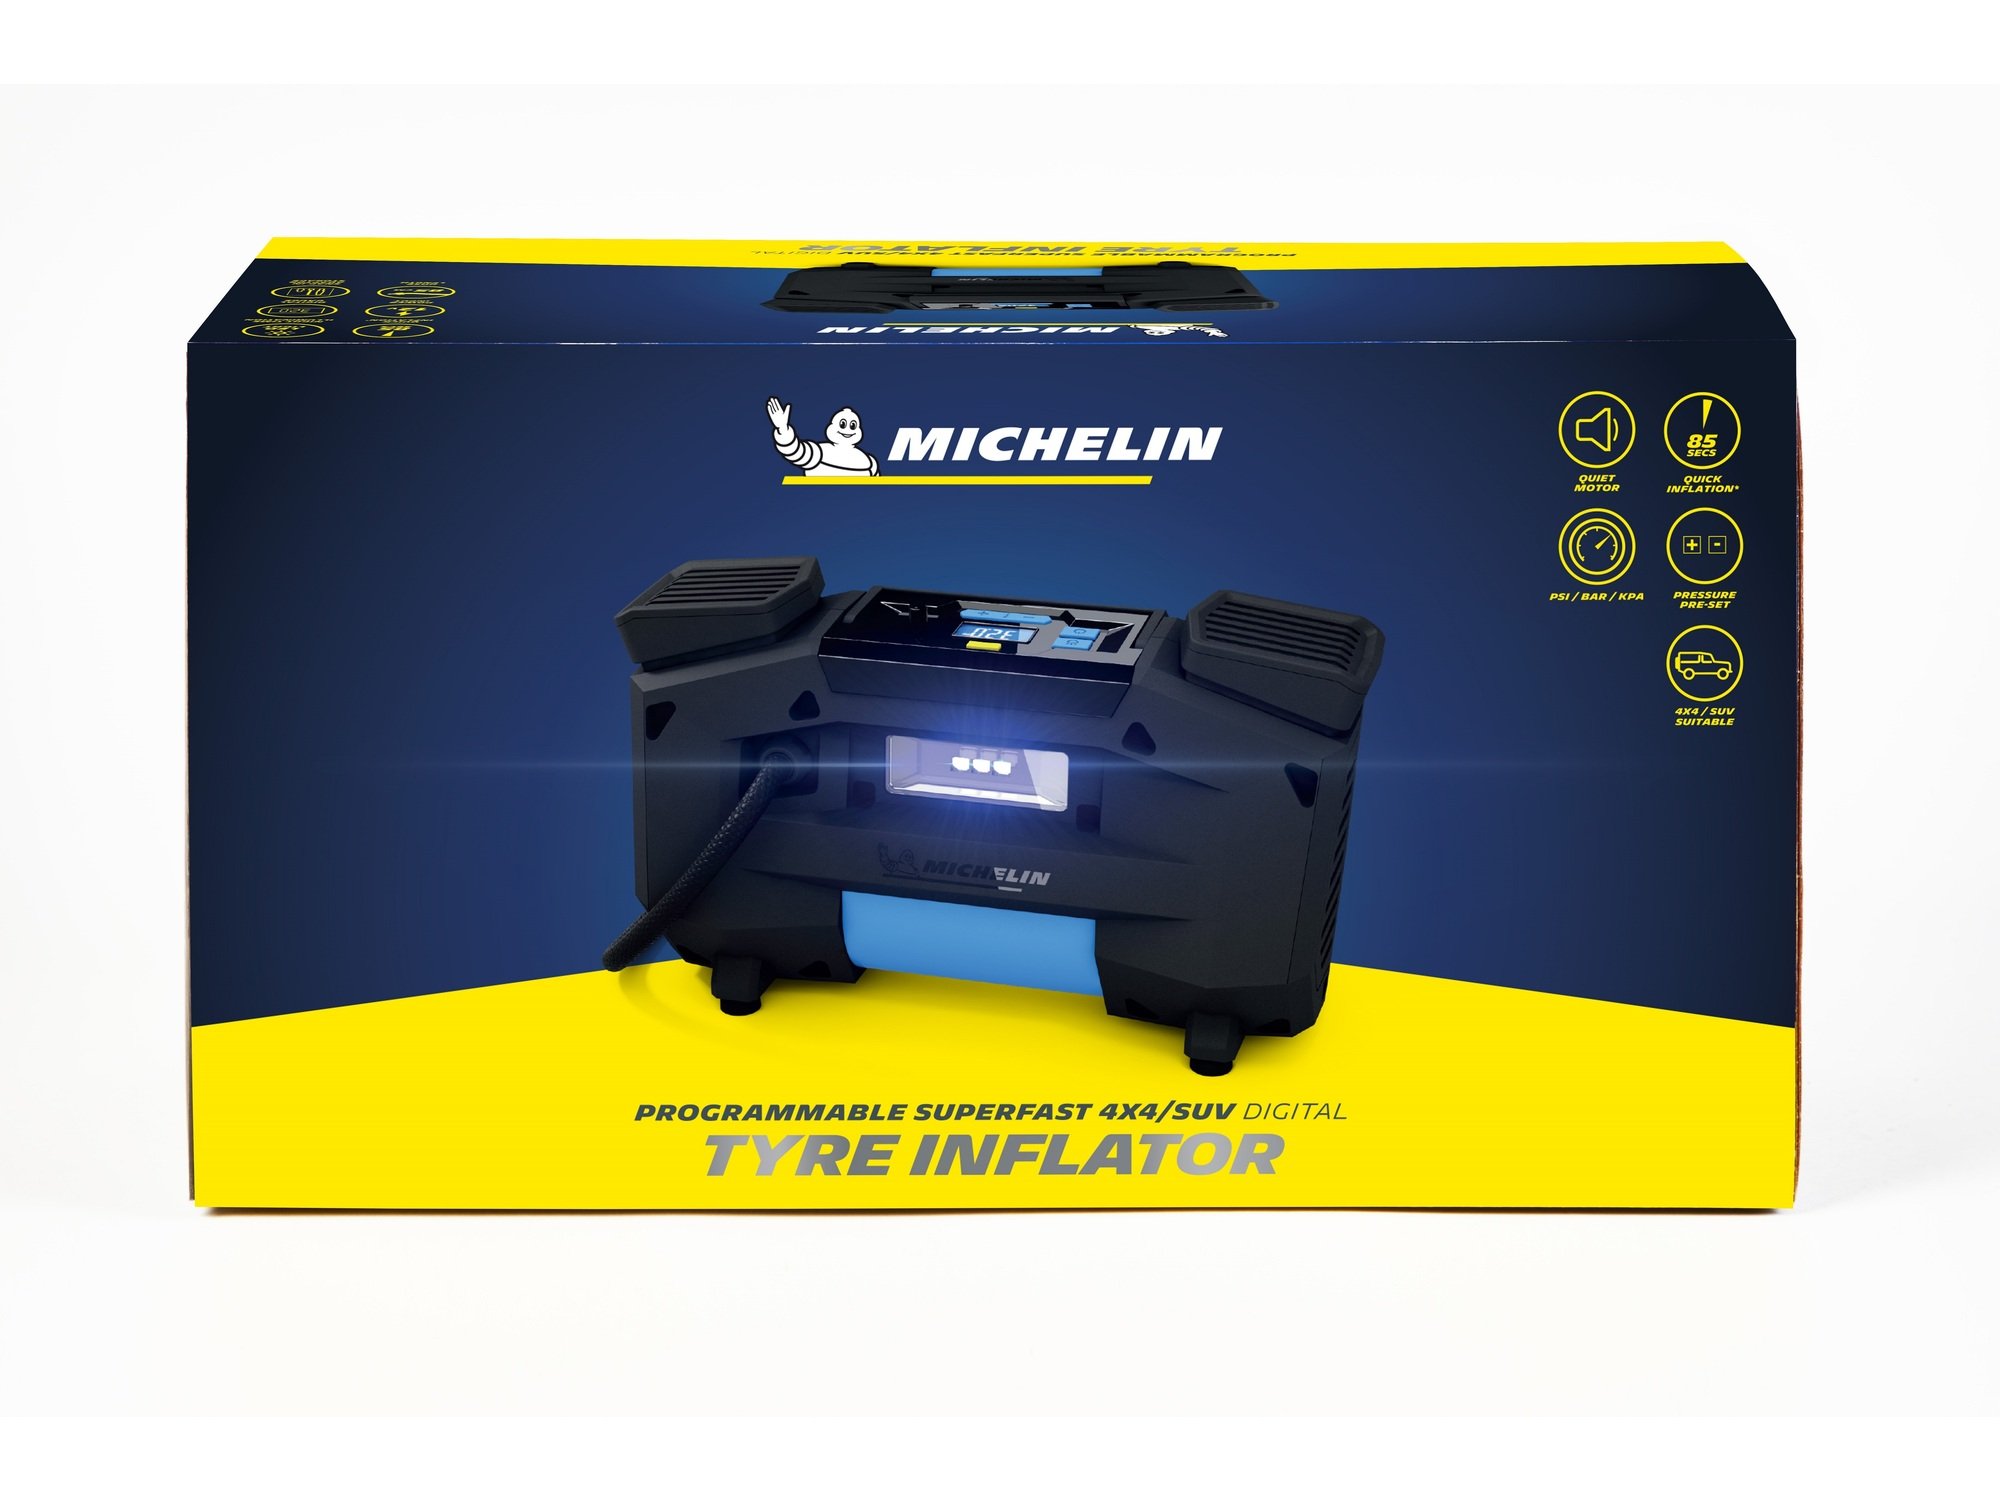 Michelin Kompresor digitali direct drive pre-set 4x4/SUV 3012314